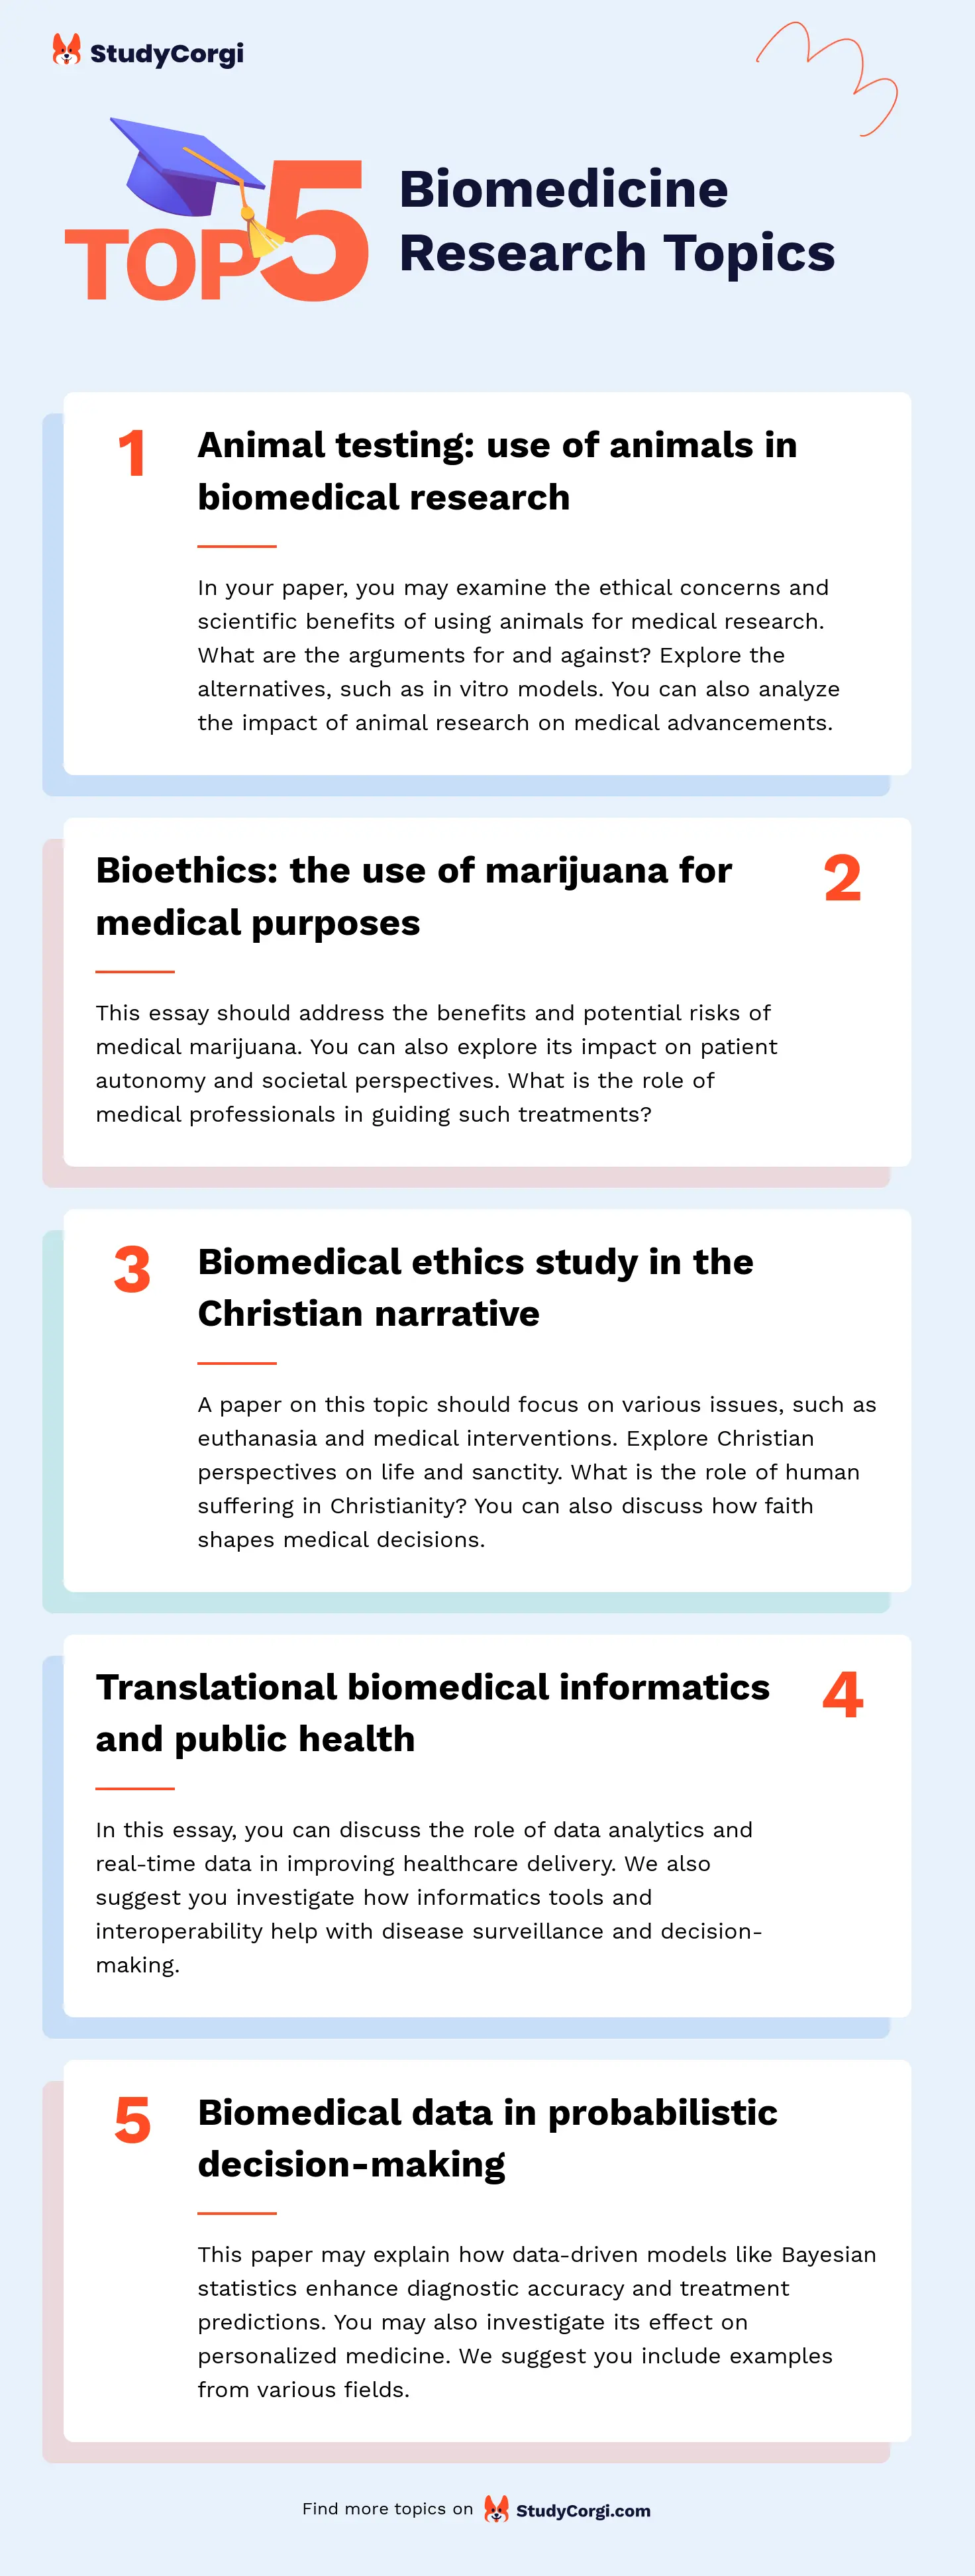 TOP-5 Biomedicine Research Topics